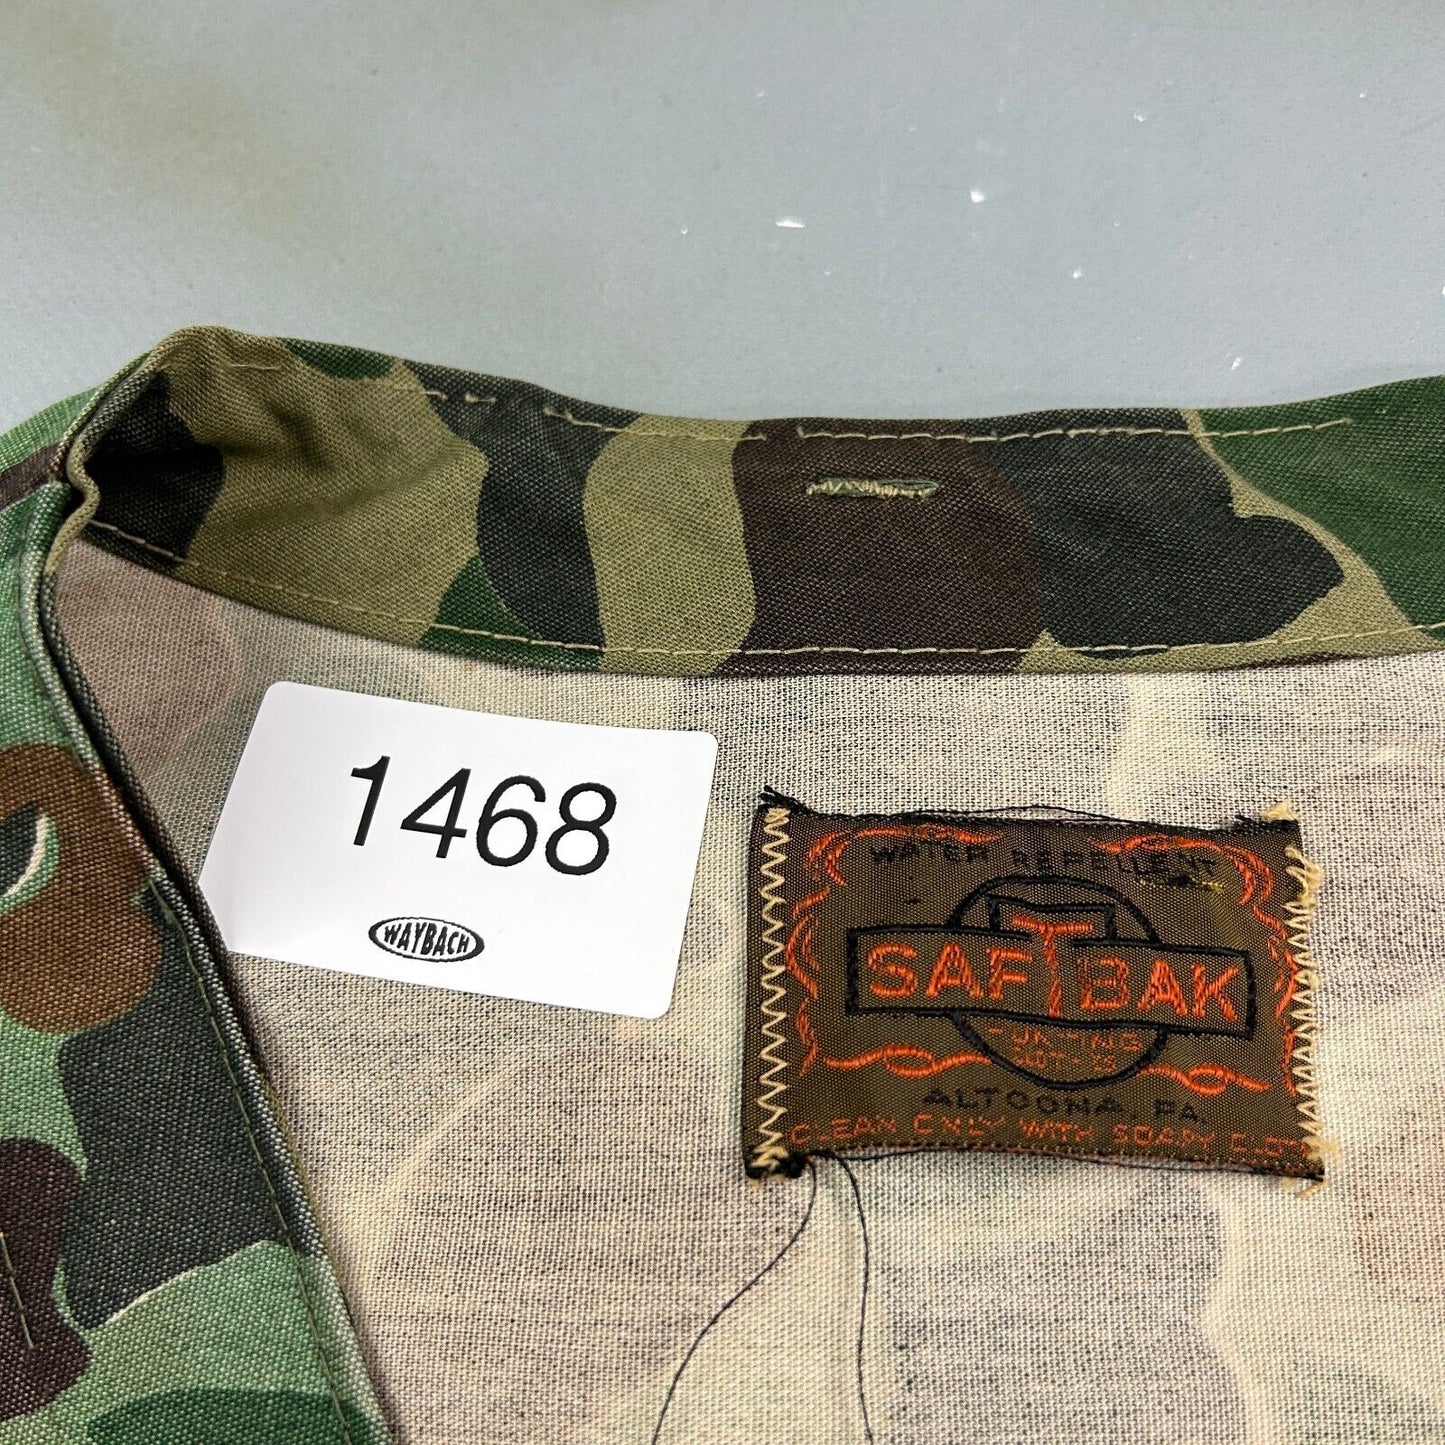 VINTAGE 70s/80s SafTbak Harick's Sports Camo Hunting Vest Jacket sz Large Adult